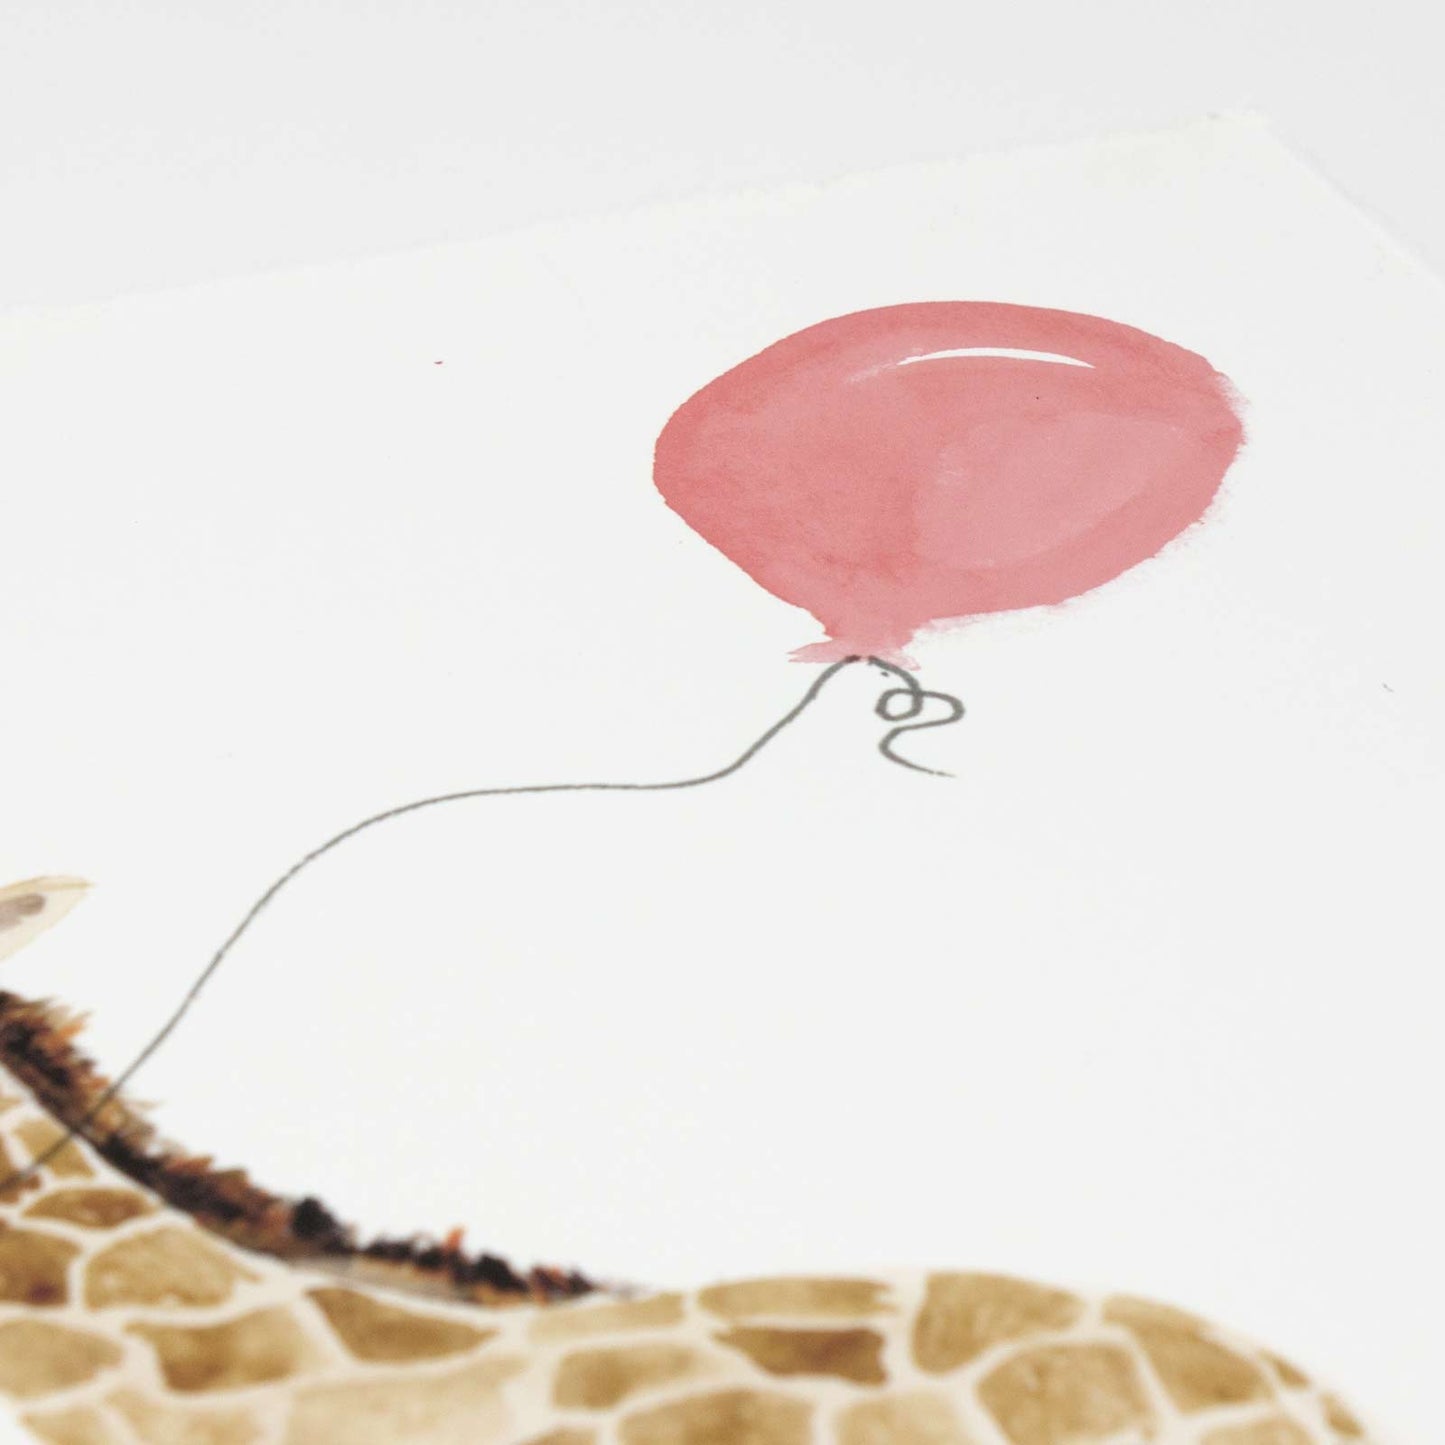 Baby Giraffe with Balloon